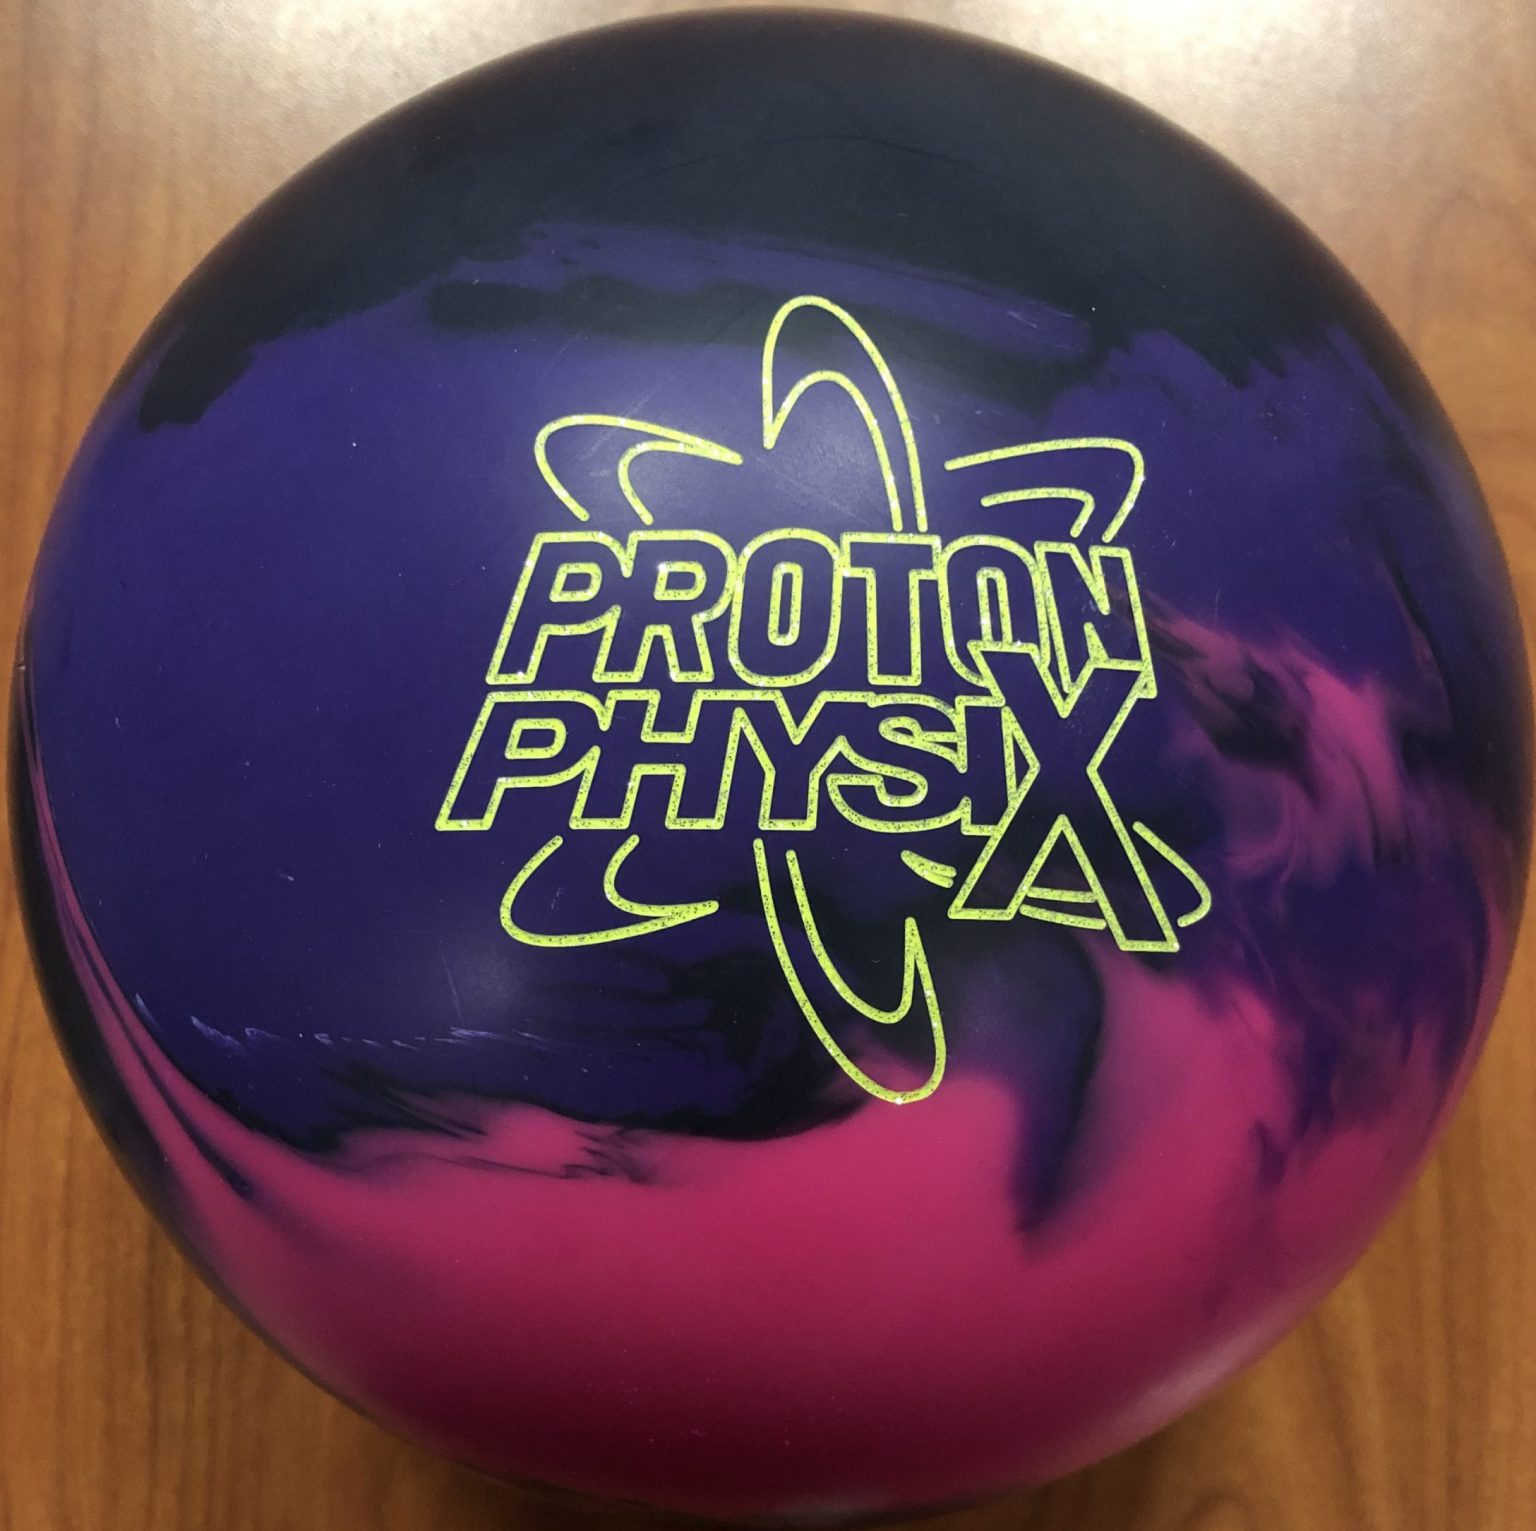 Storm Proton Physix Bowling Ball Review Tamer Bowling